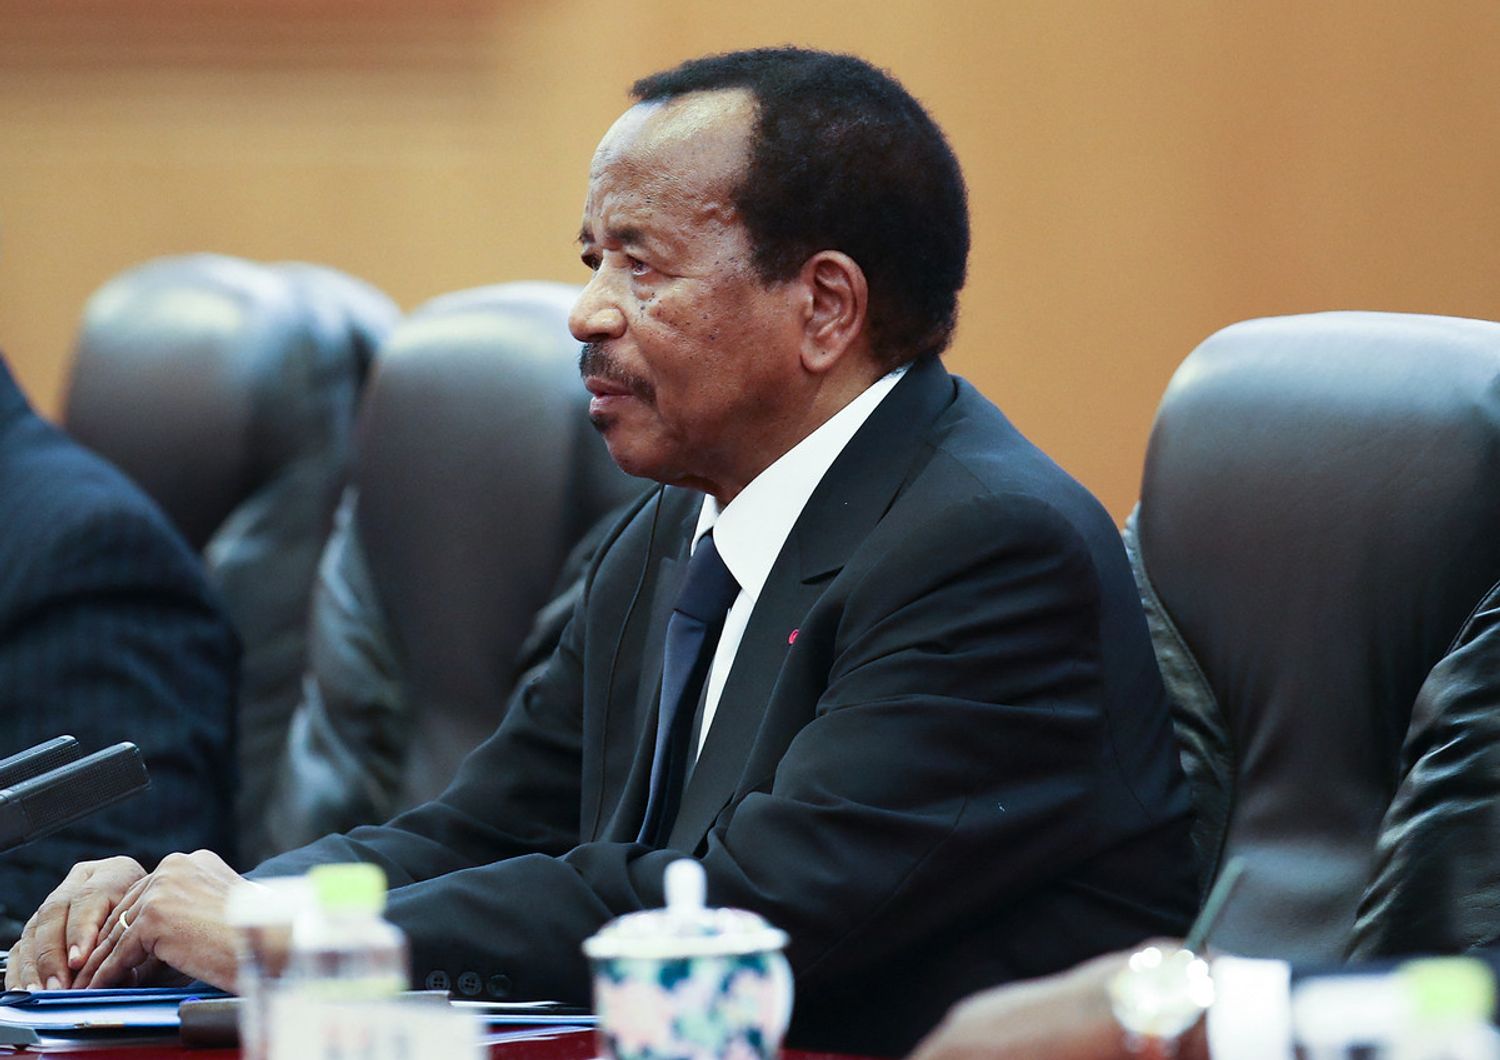 Paul Biya, presidente del Camerun